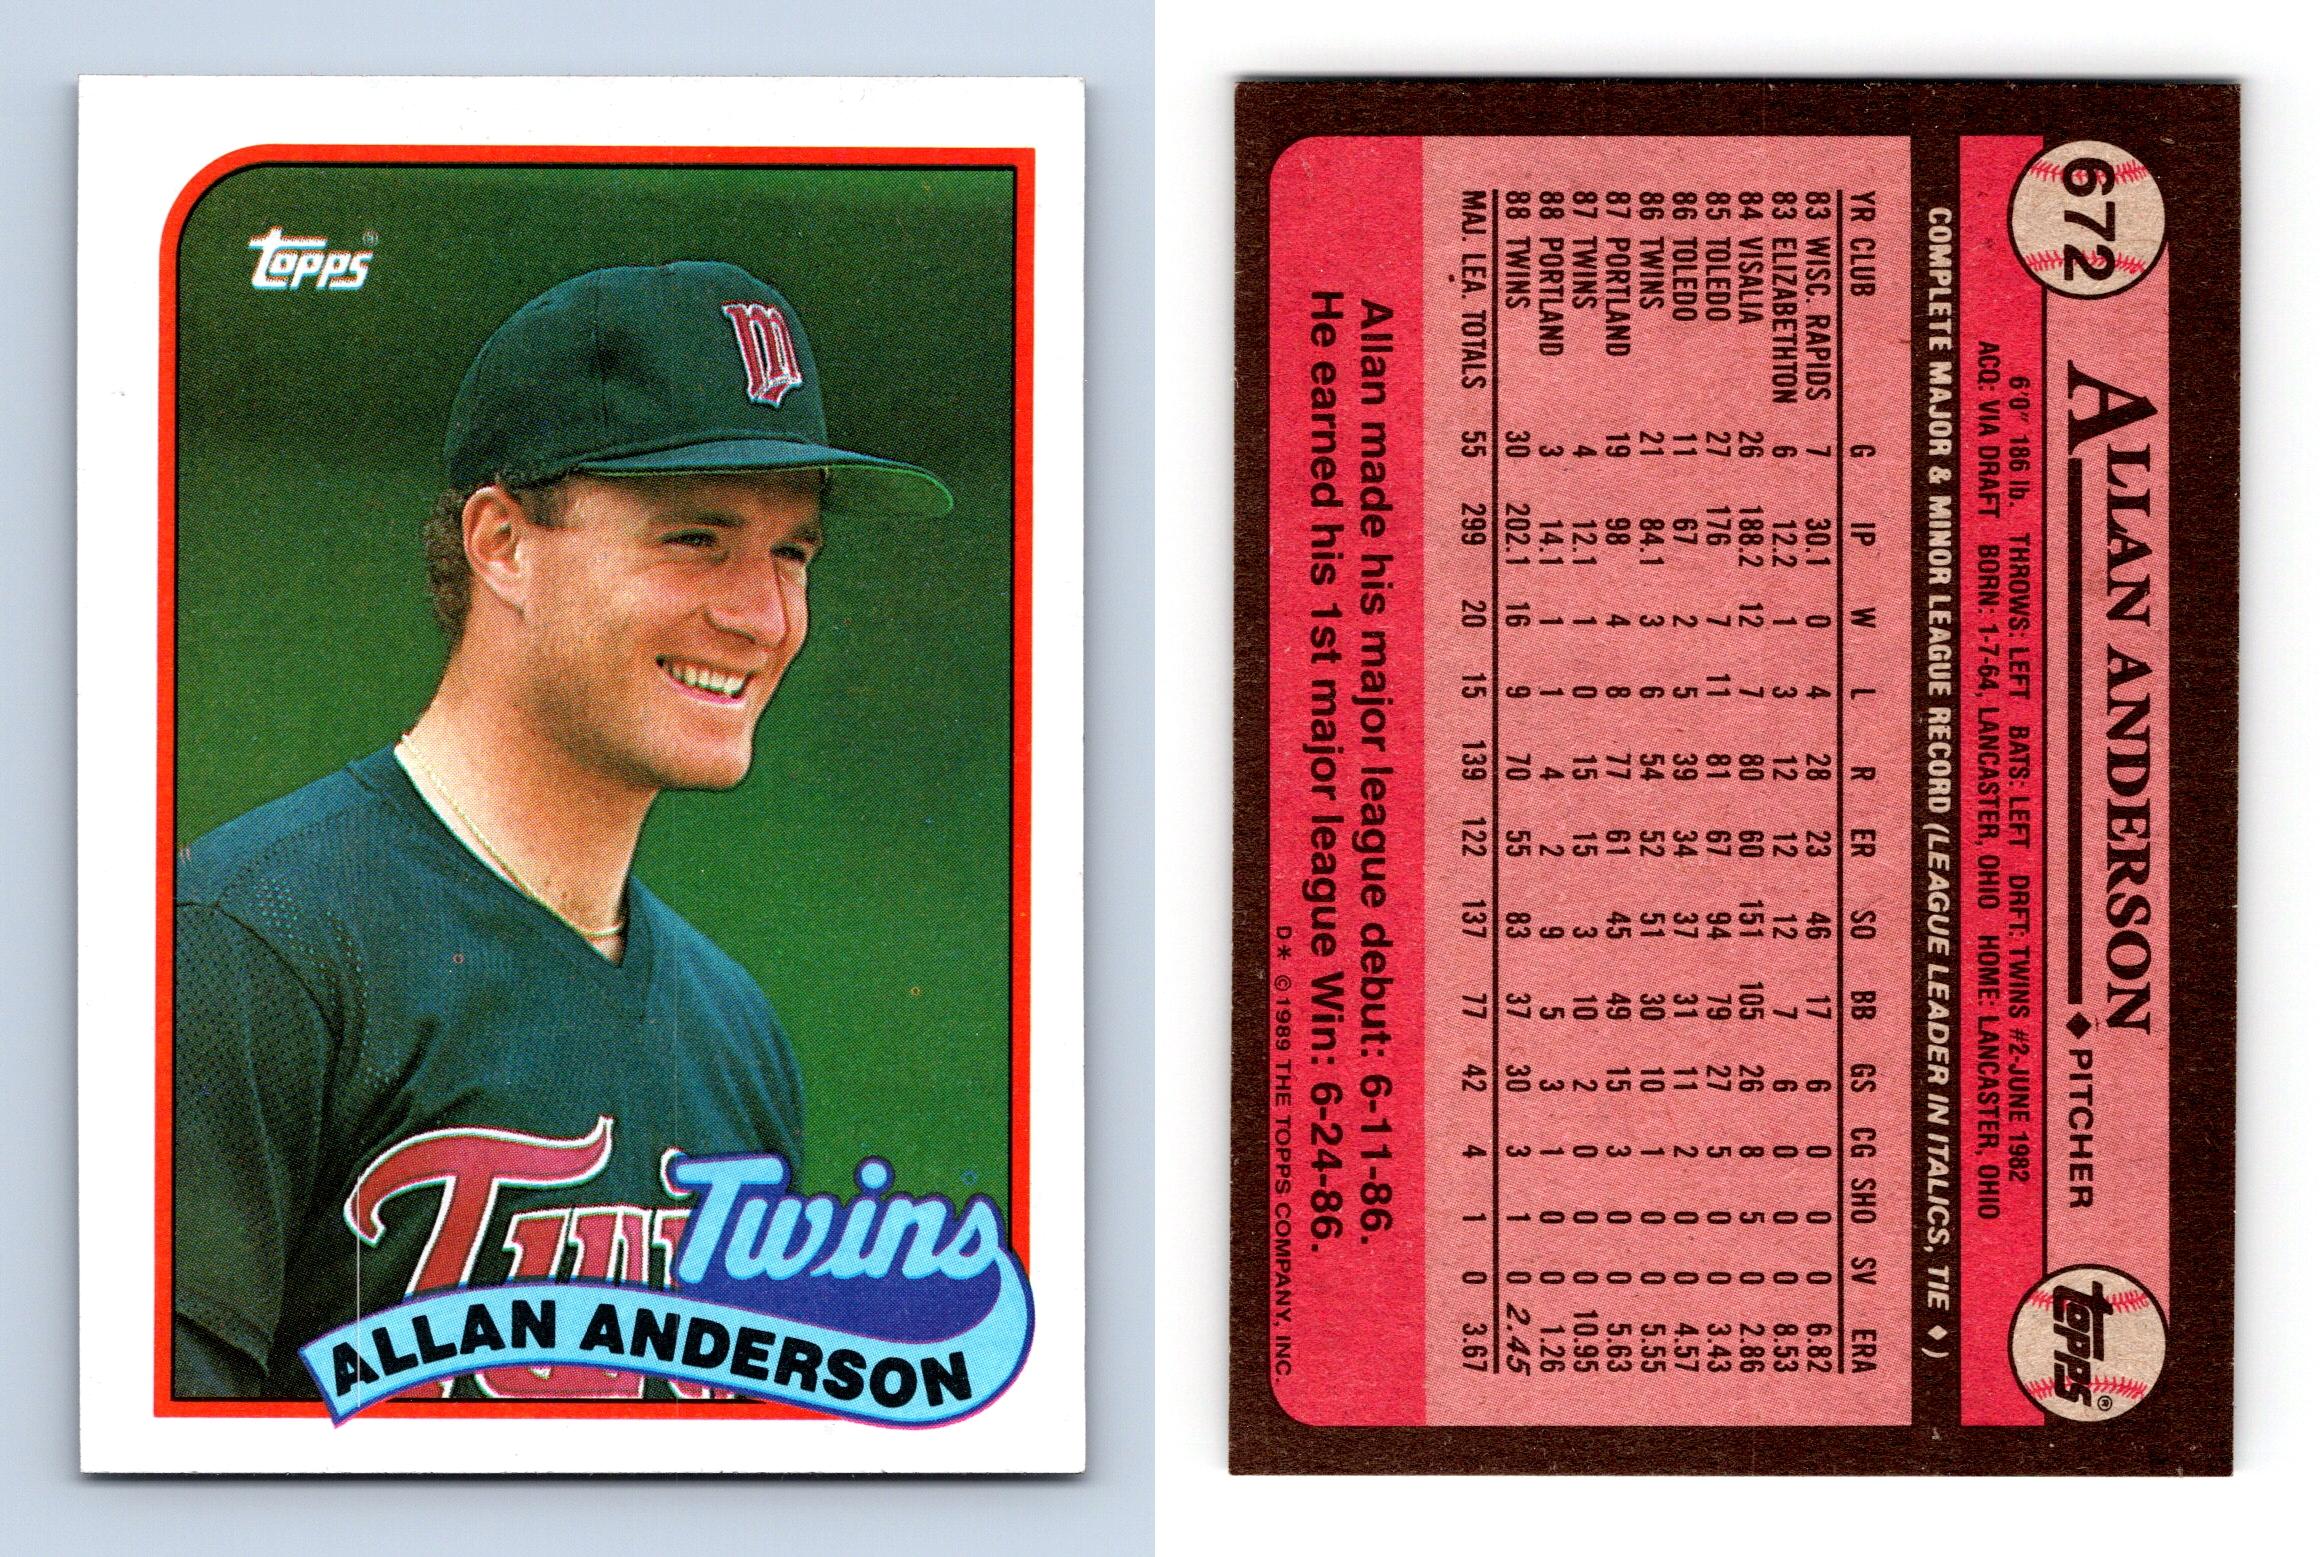 1989 Topps Baseball #382 John Smoltz Rookie Card - Near Mint to Mint